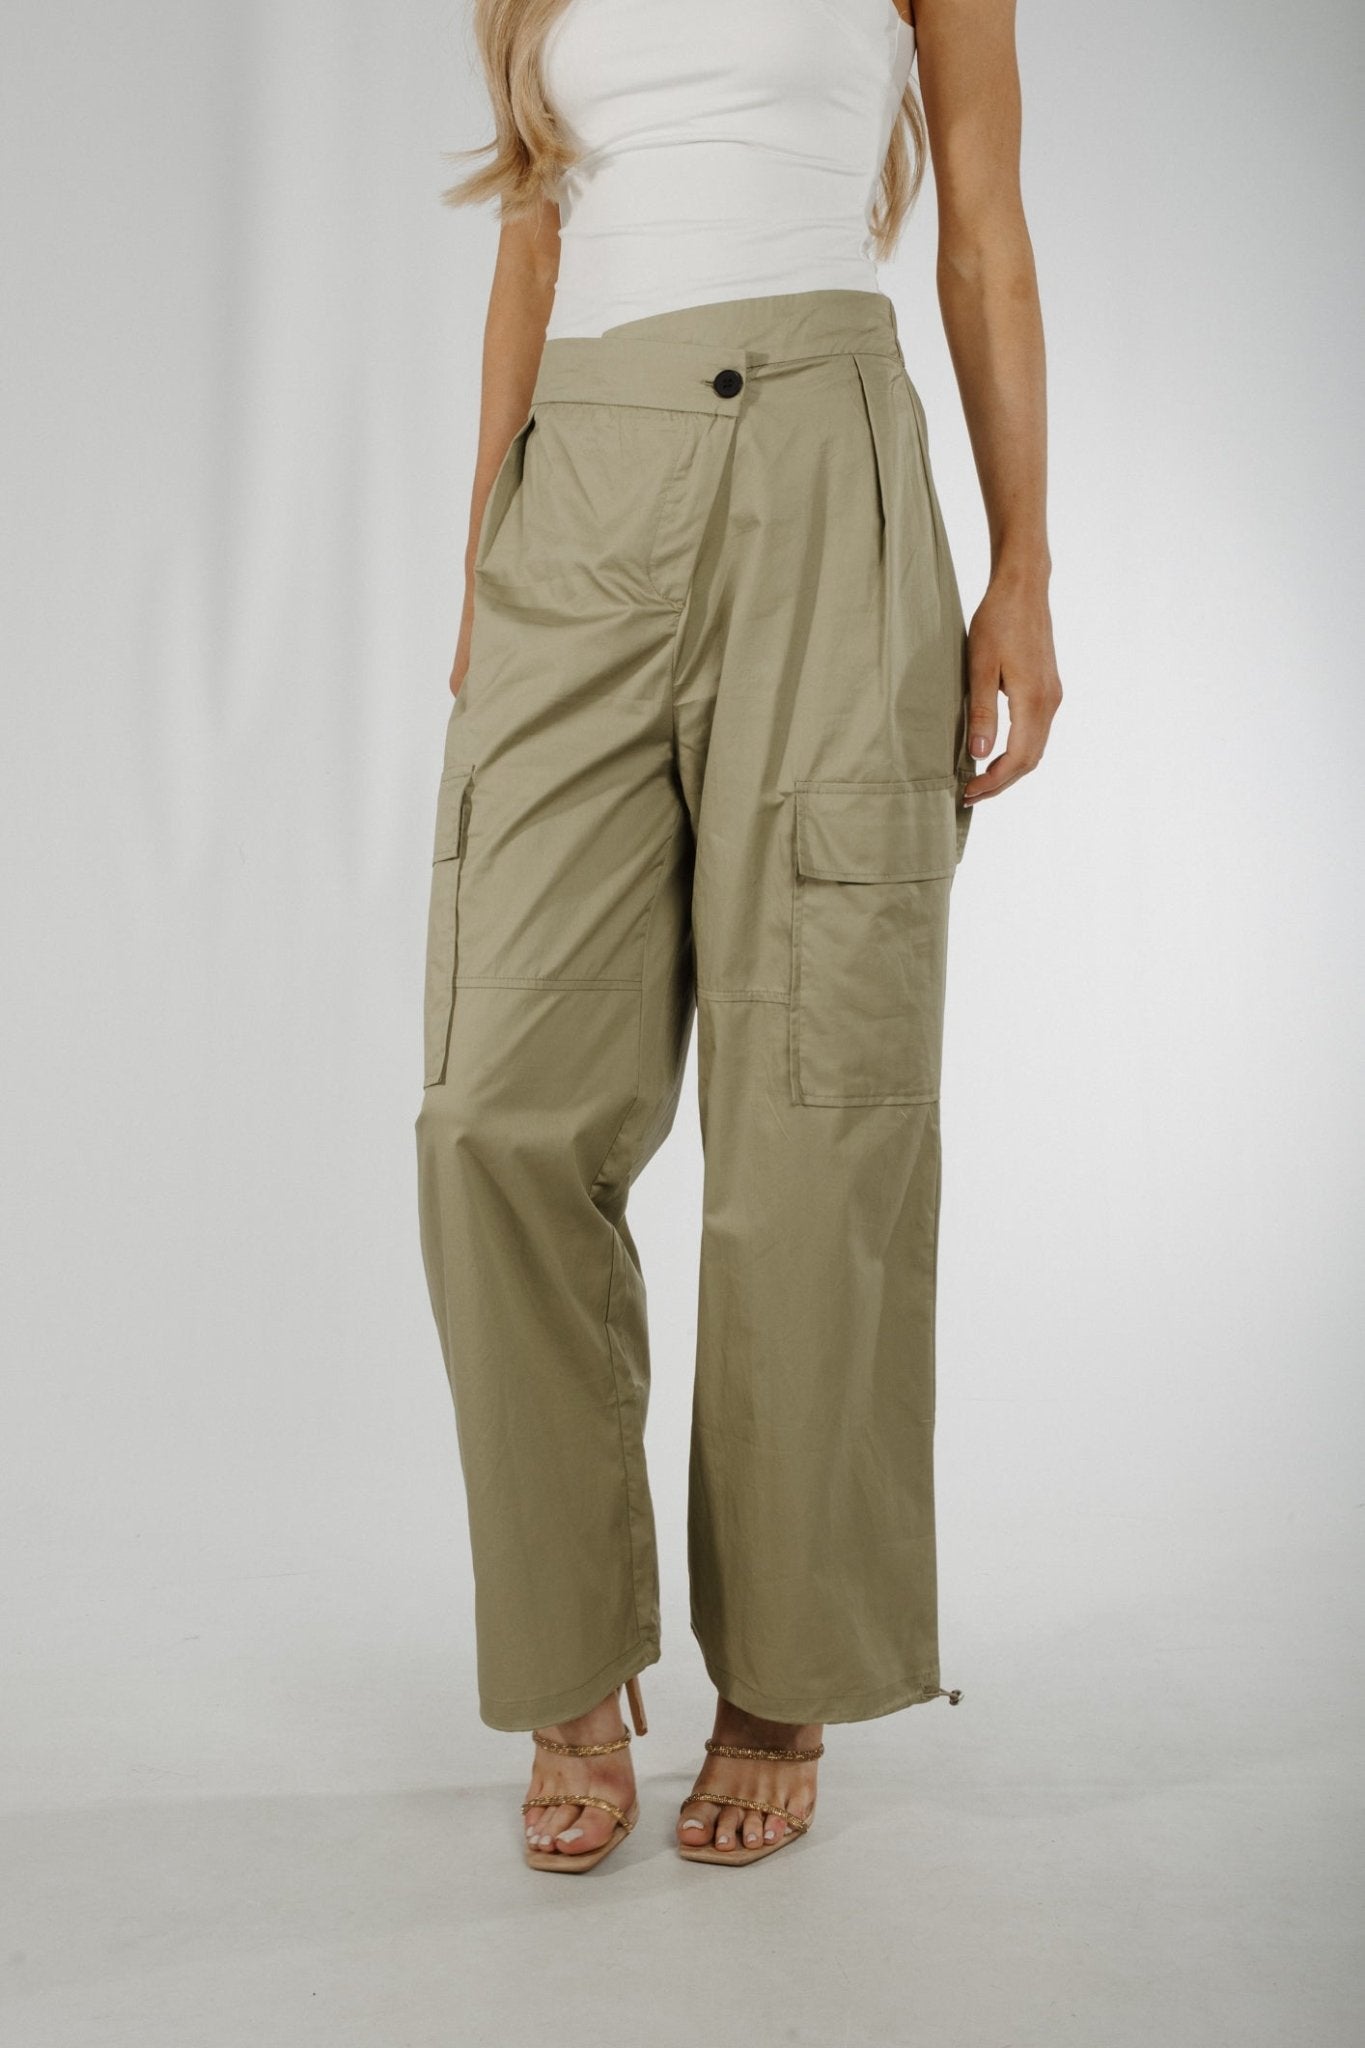 Holly Parachute Trousers In Khaki - The Walk in Wardrobe